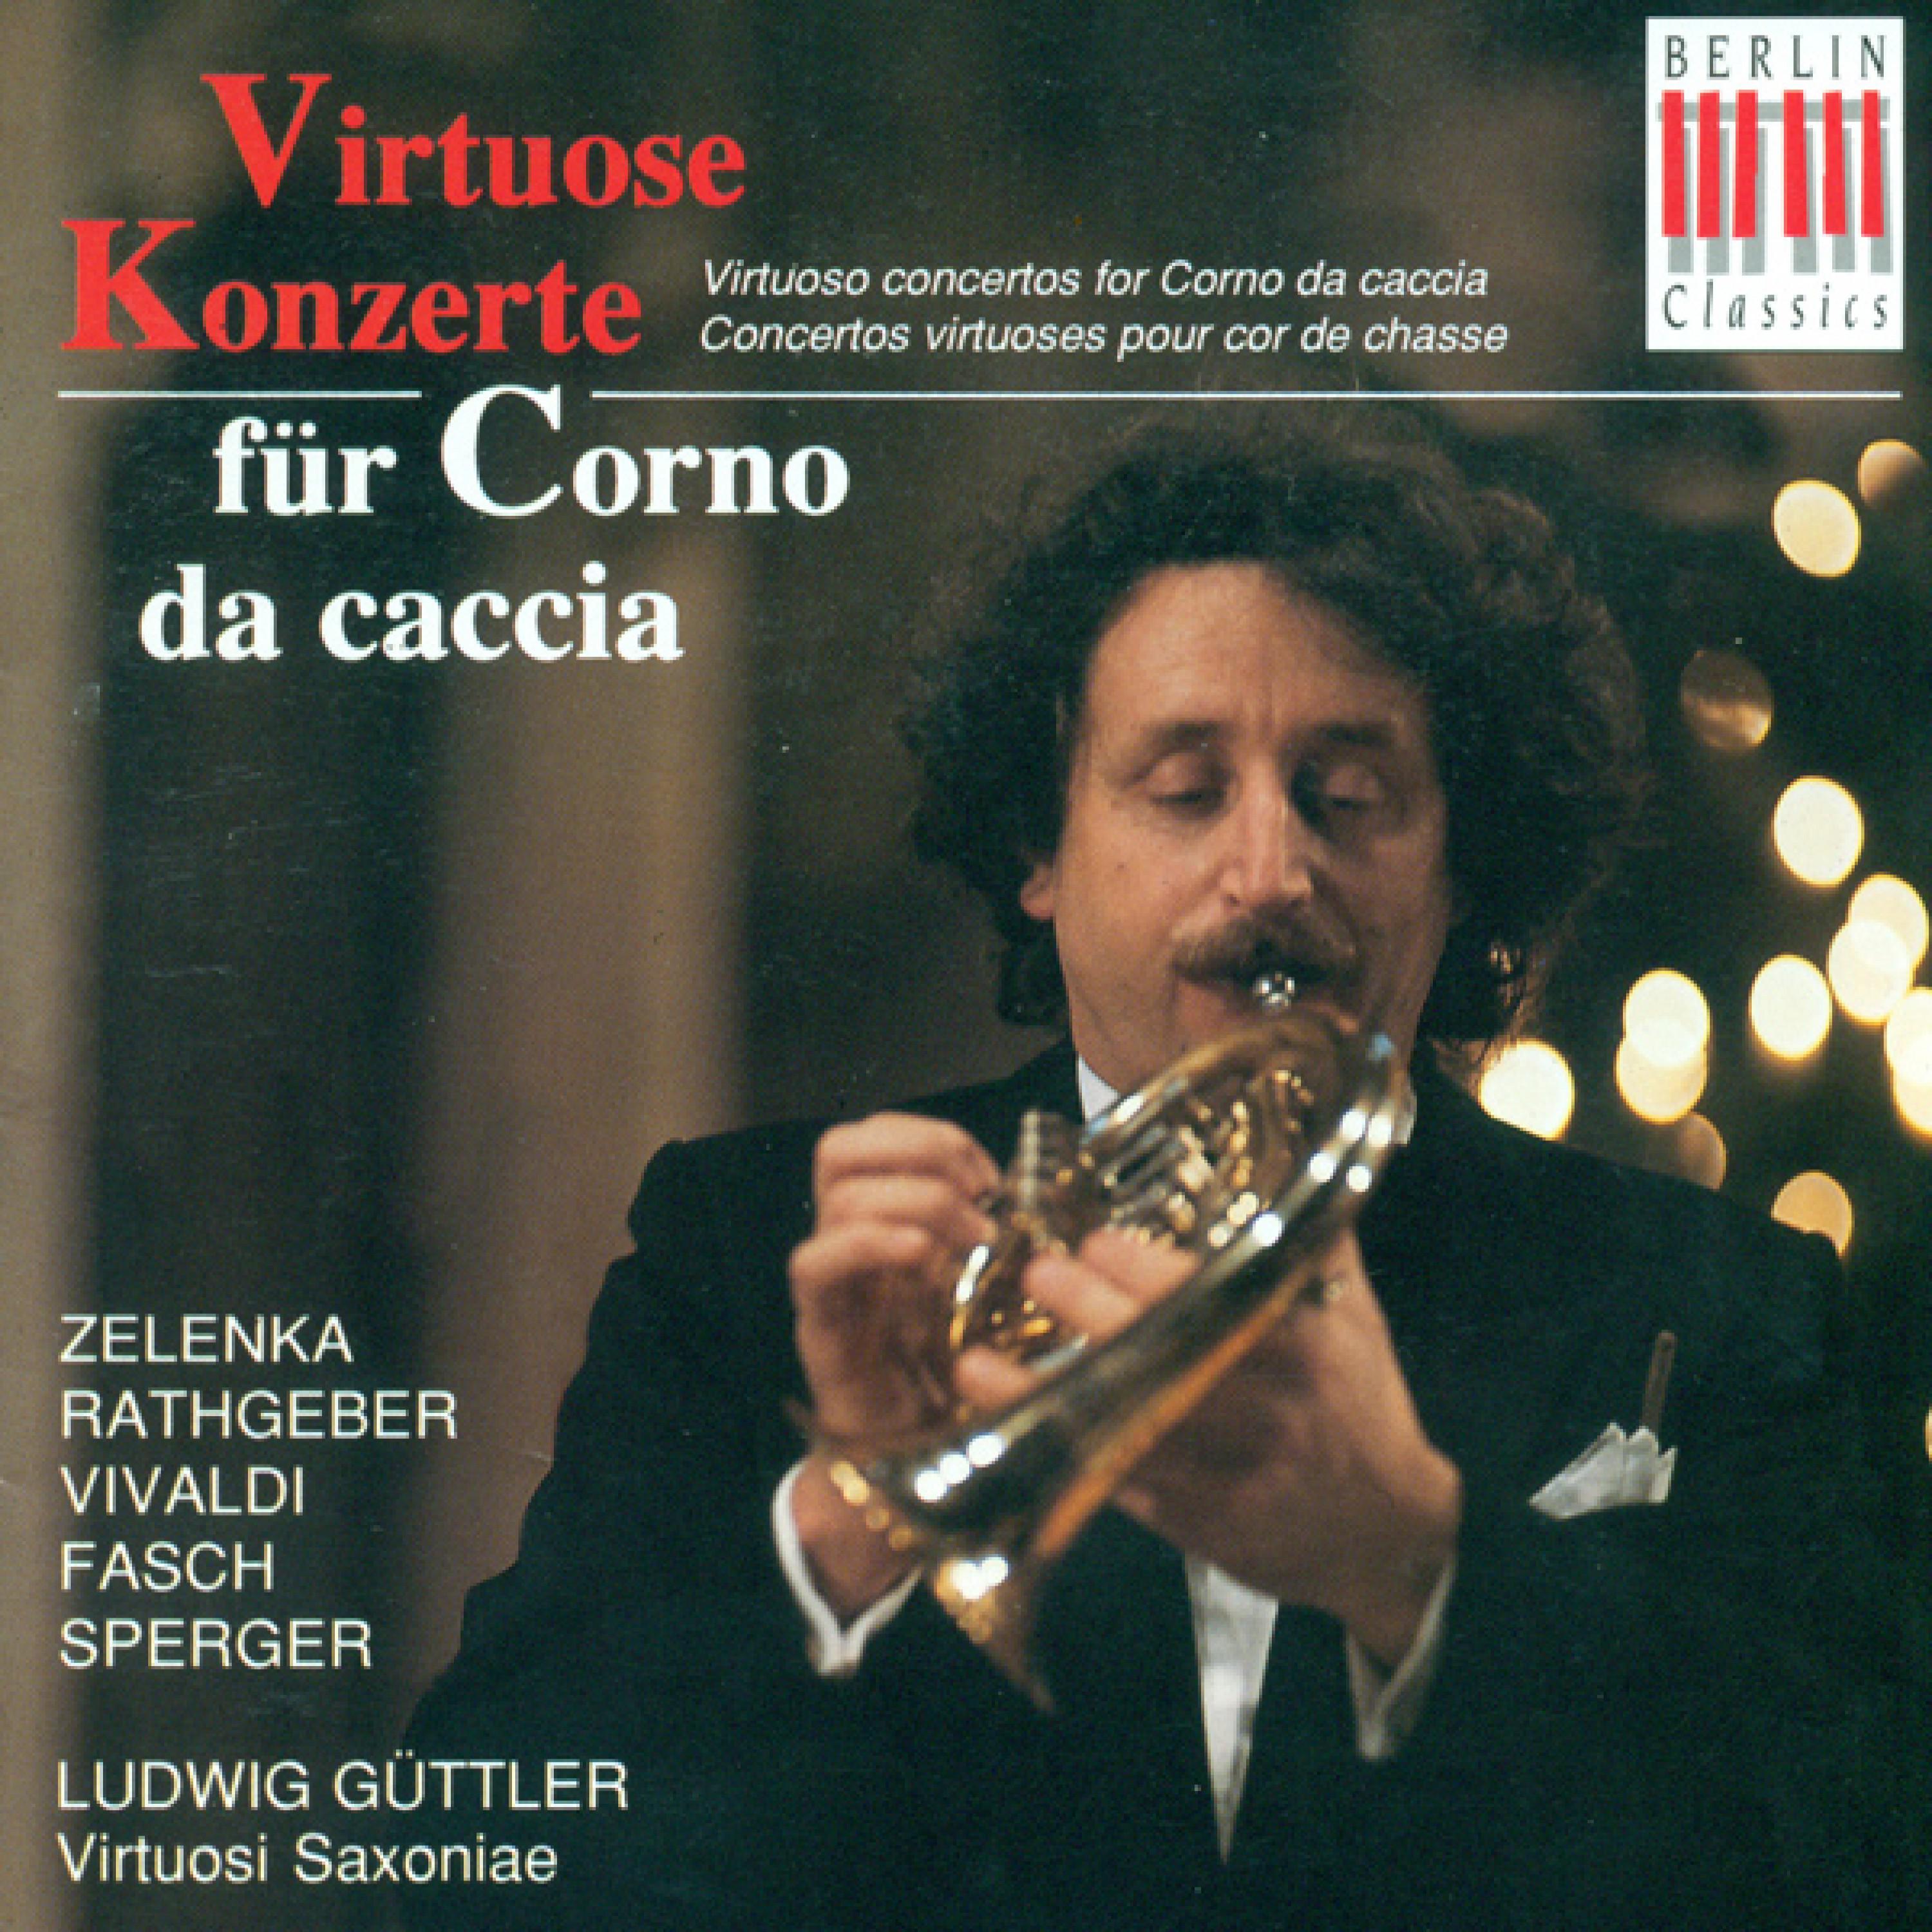 Concerto for 2 Horns in F Major, RV 539: I. Allegro (arranged by M. Fechner)